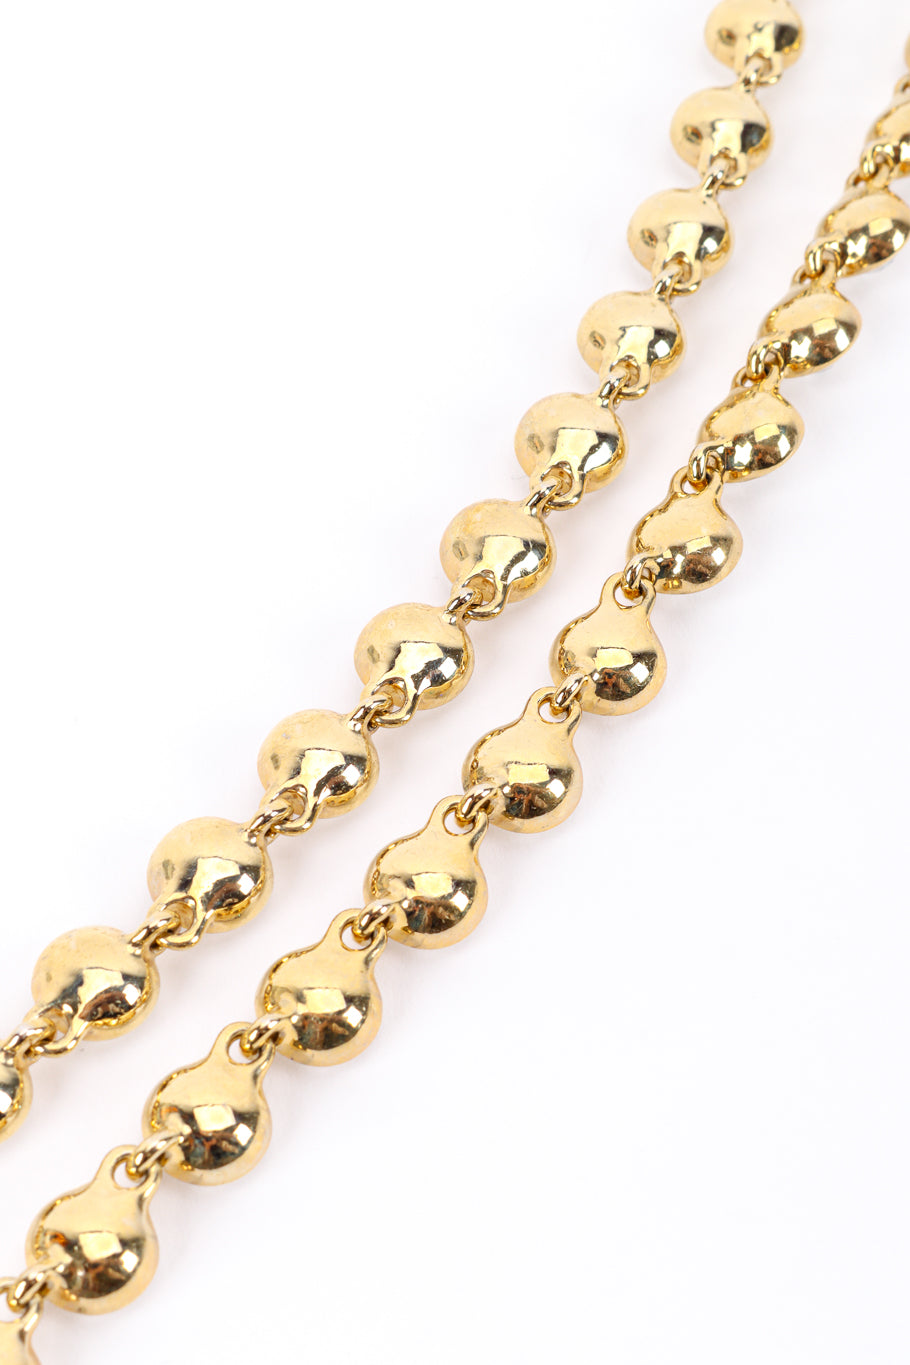 Vintage Givenchy Crystal Link Necklace back of link closeup @recessla